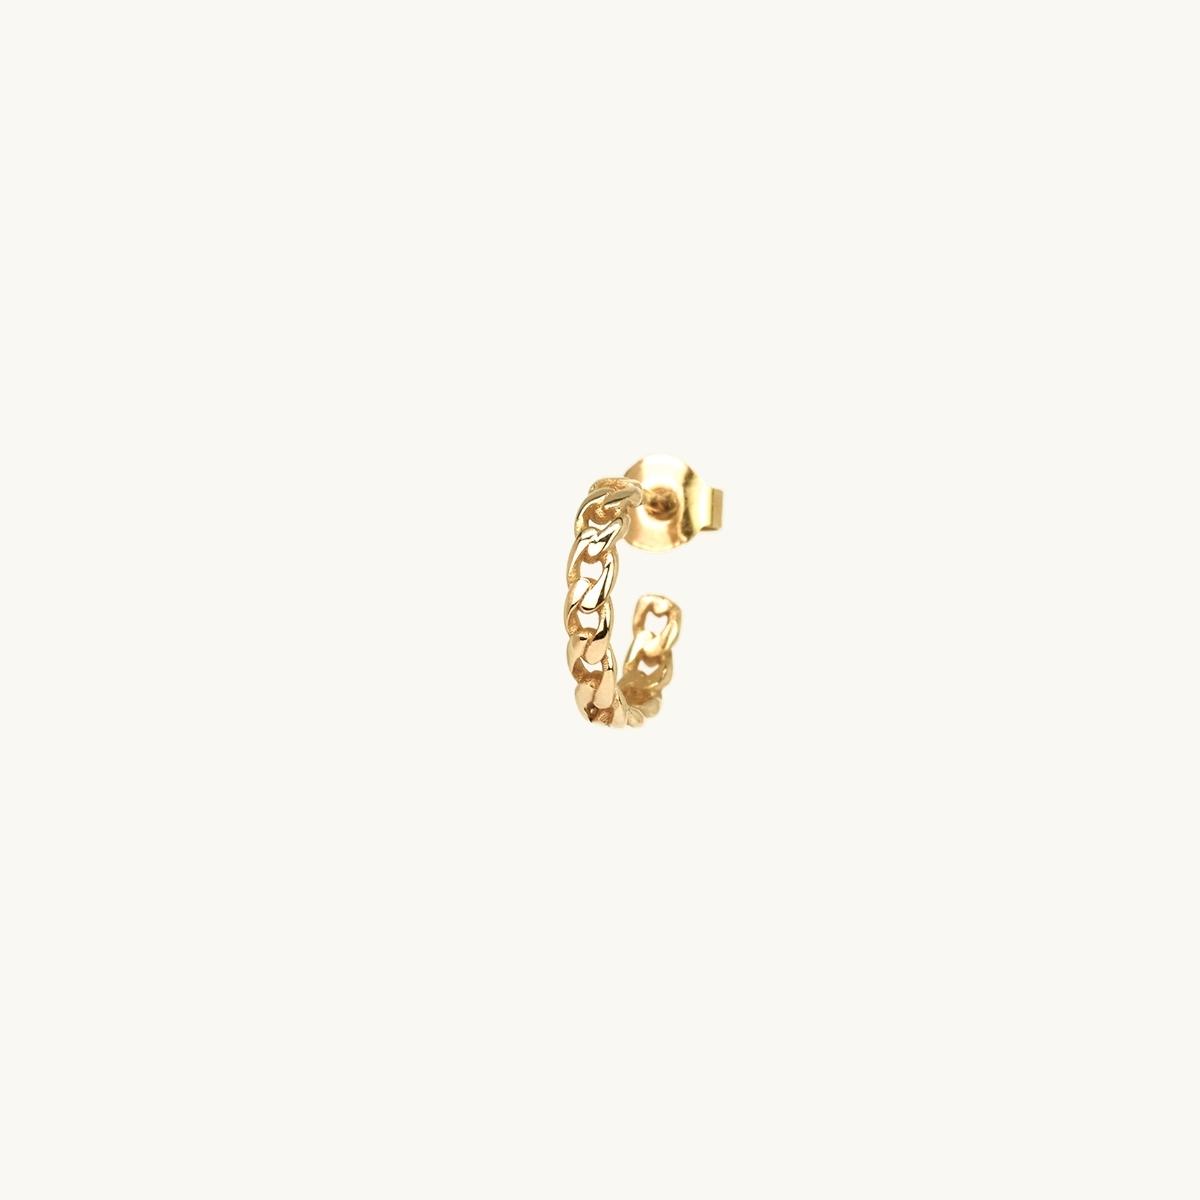 Earring link in 18K gold plated brass